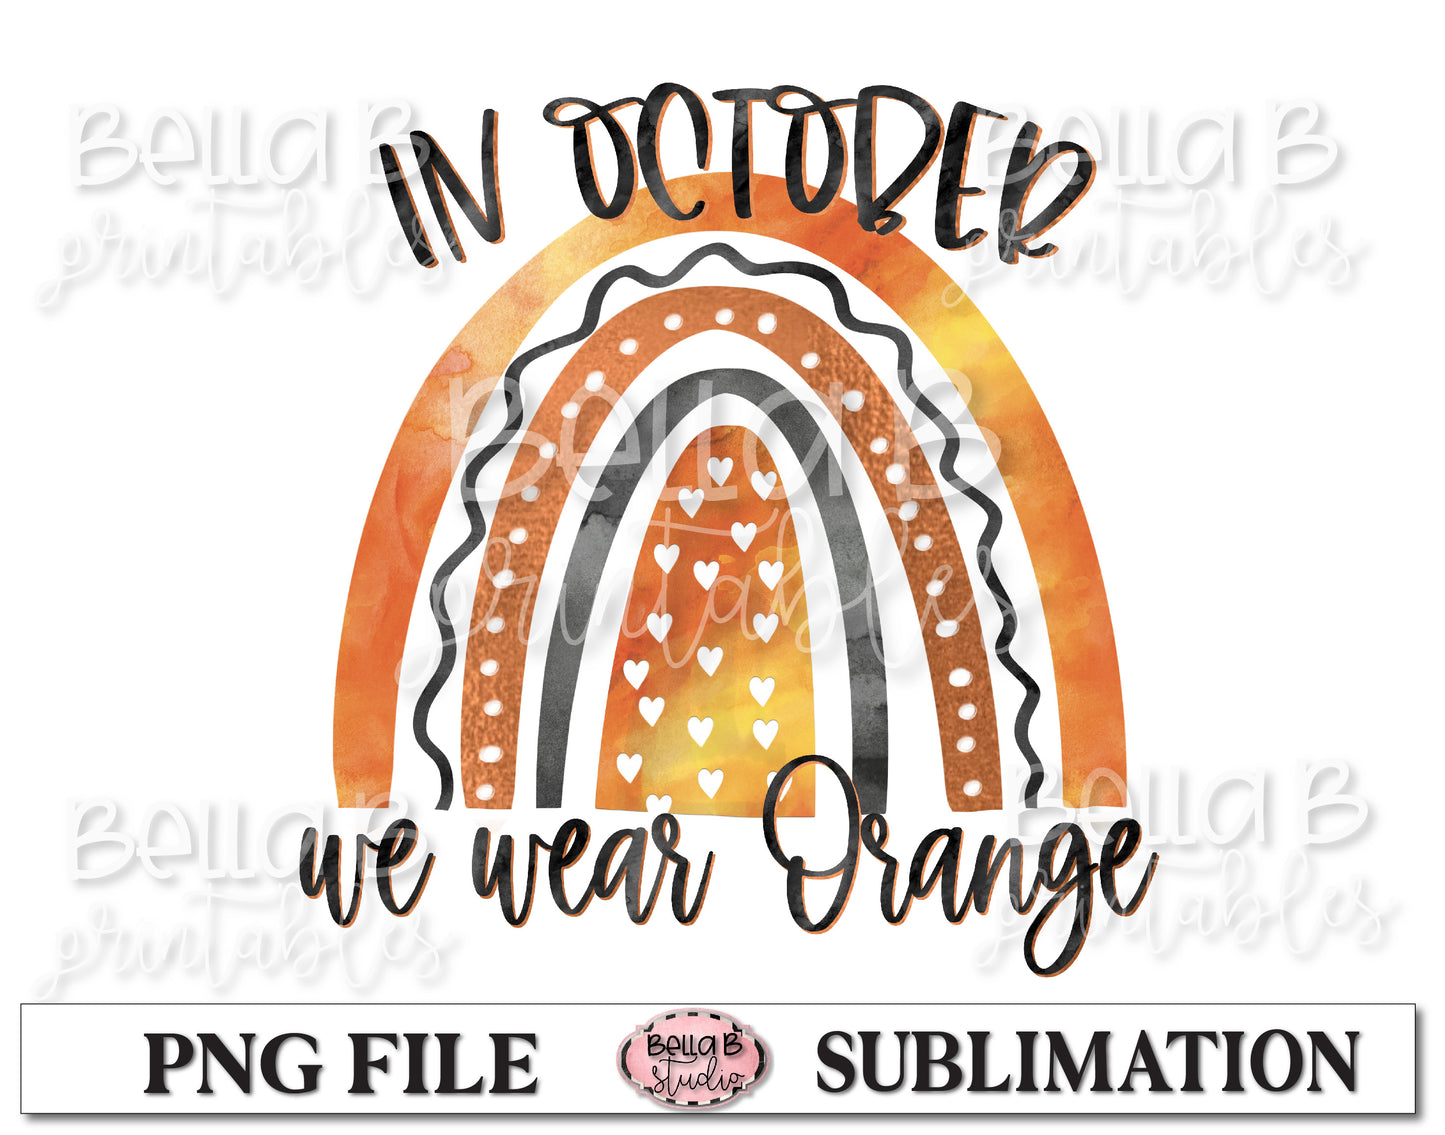 Anti Bully Awareness Sublimation Design, In October We Wear Orange